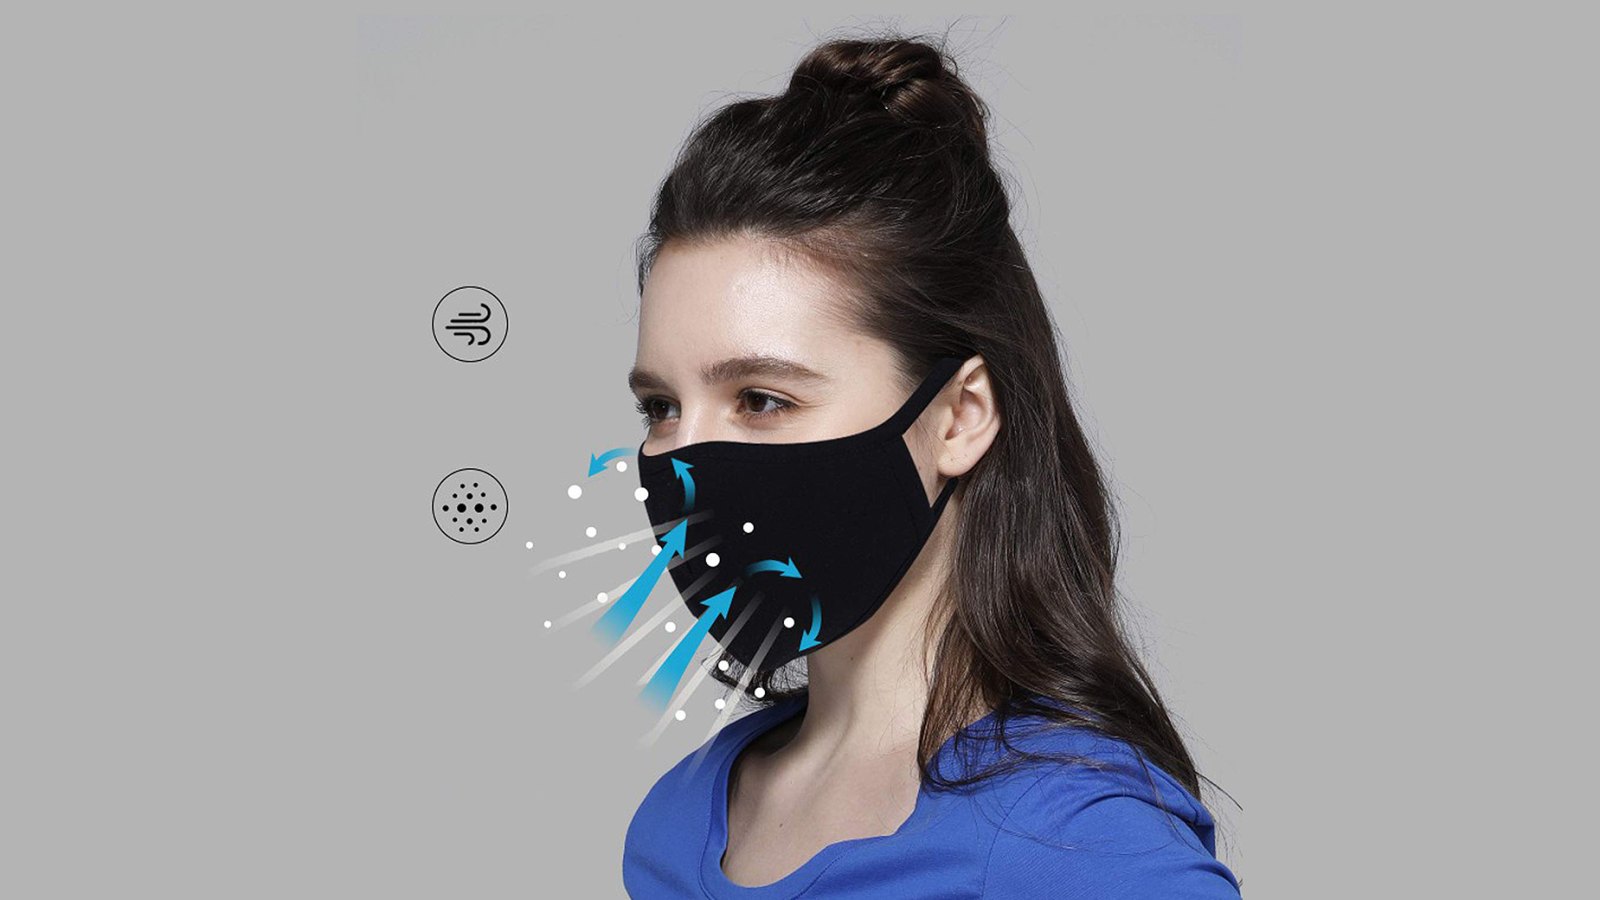 ZITOOP Fashion Protective Face Masks